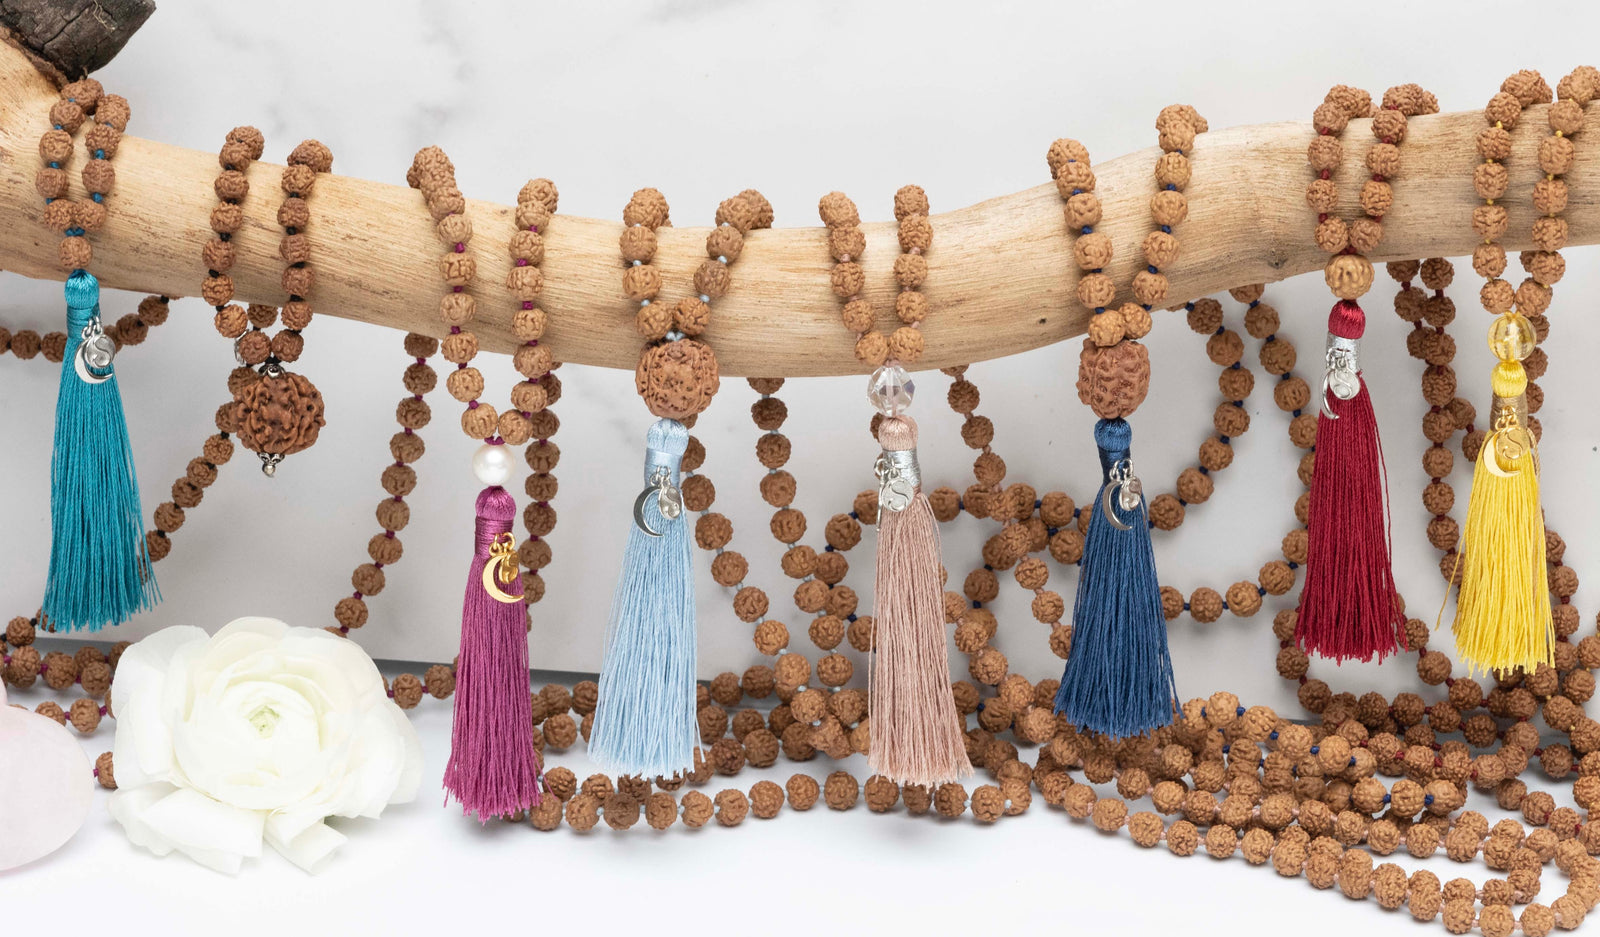 Rosewood Mala (108 Beads on Thread) - The Amma Store